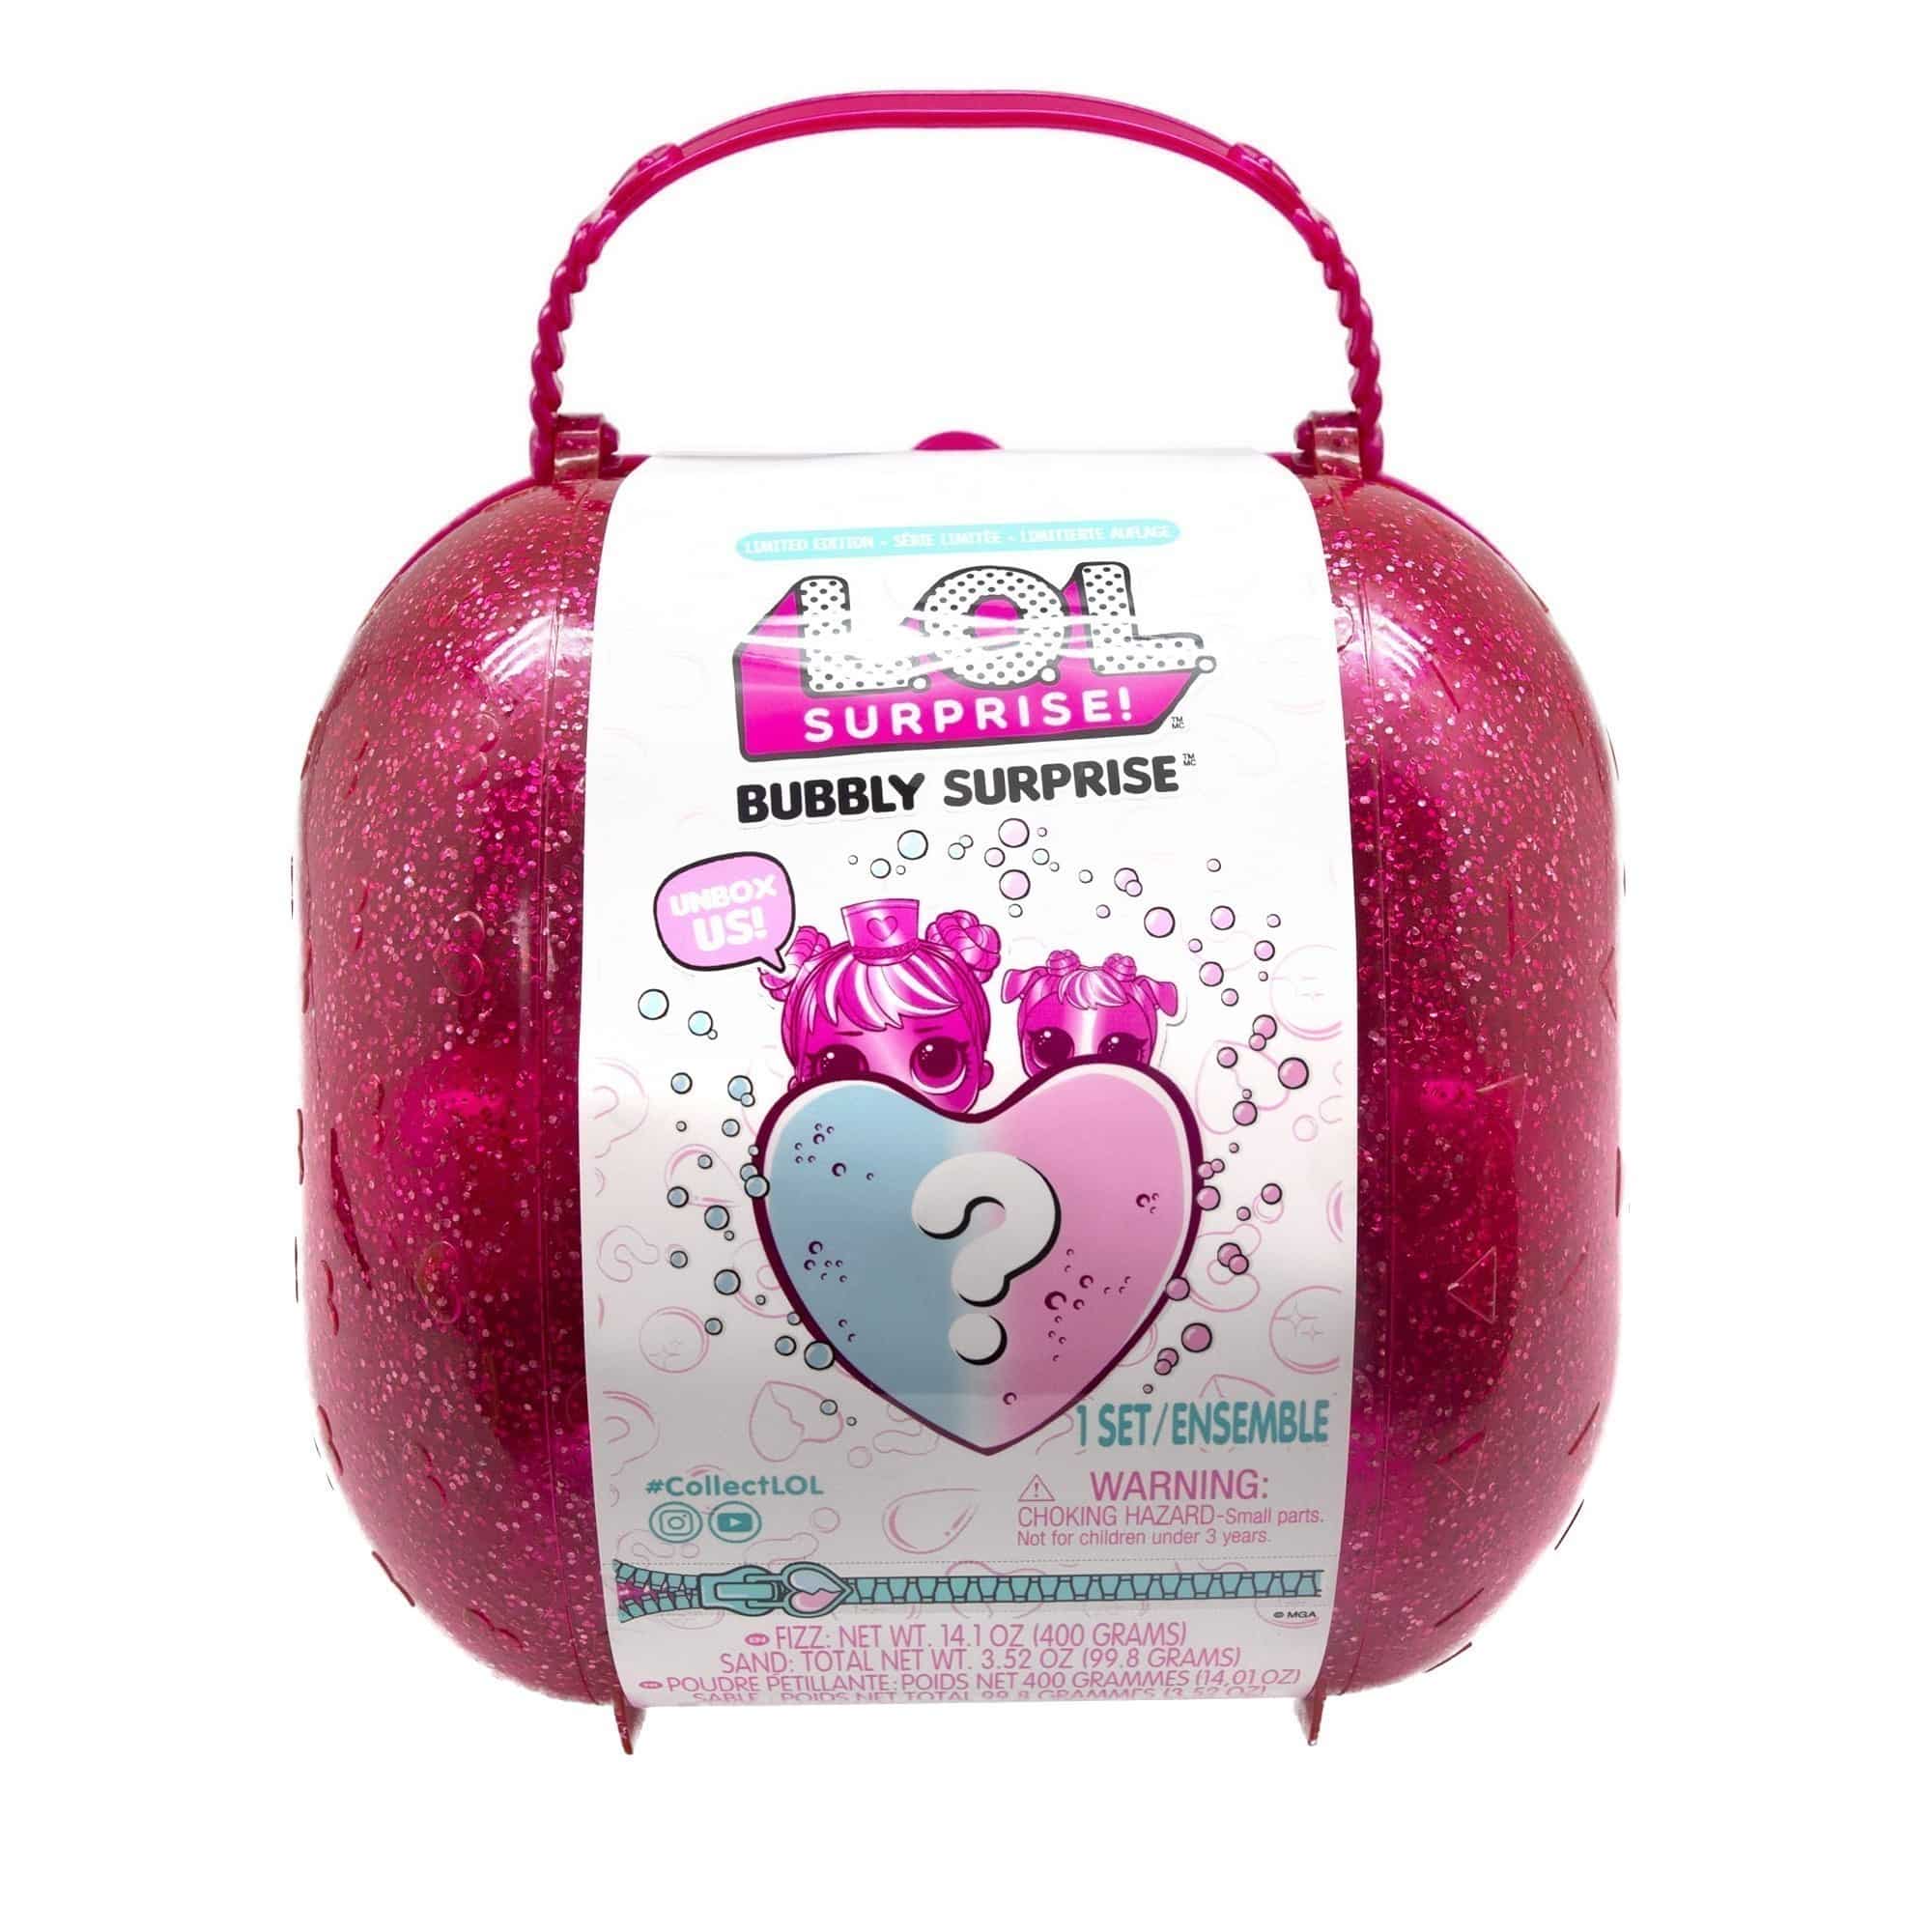 LOL Surprise - Bubbly Surprise - Limited Edition - Pink